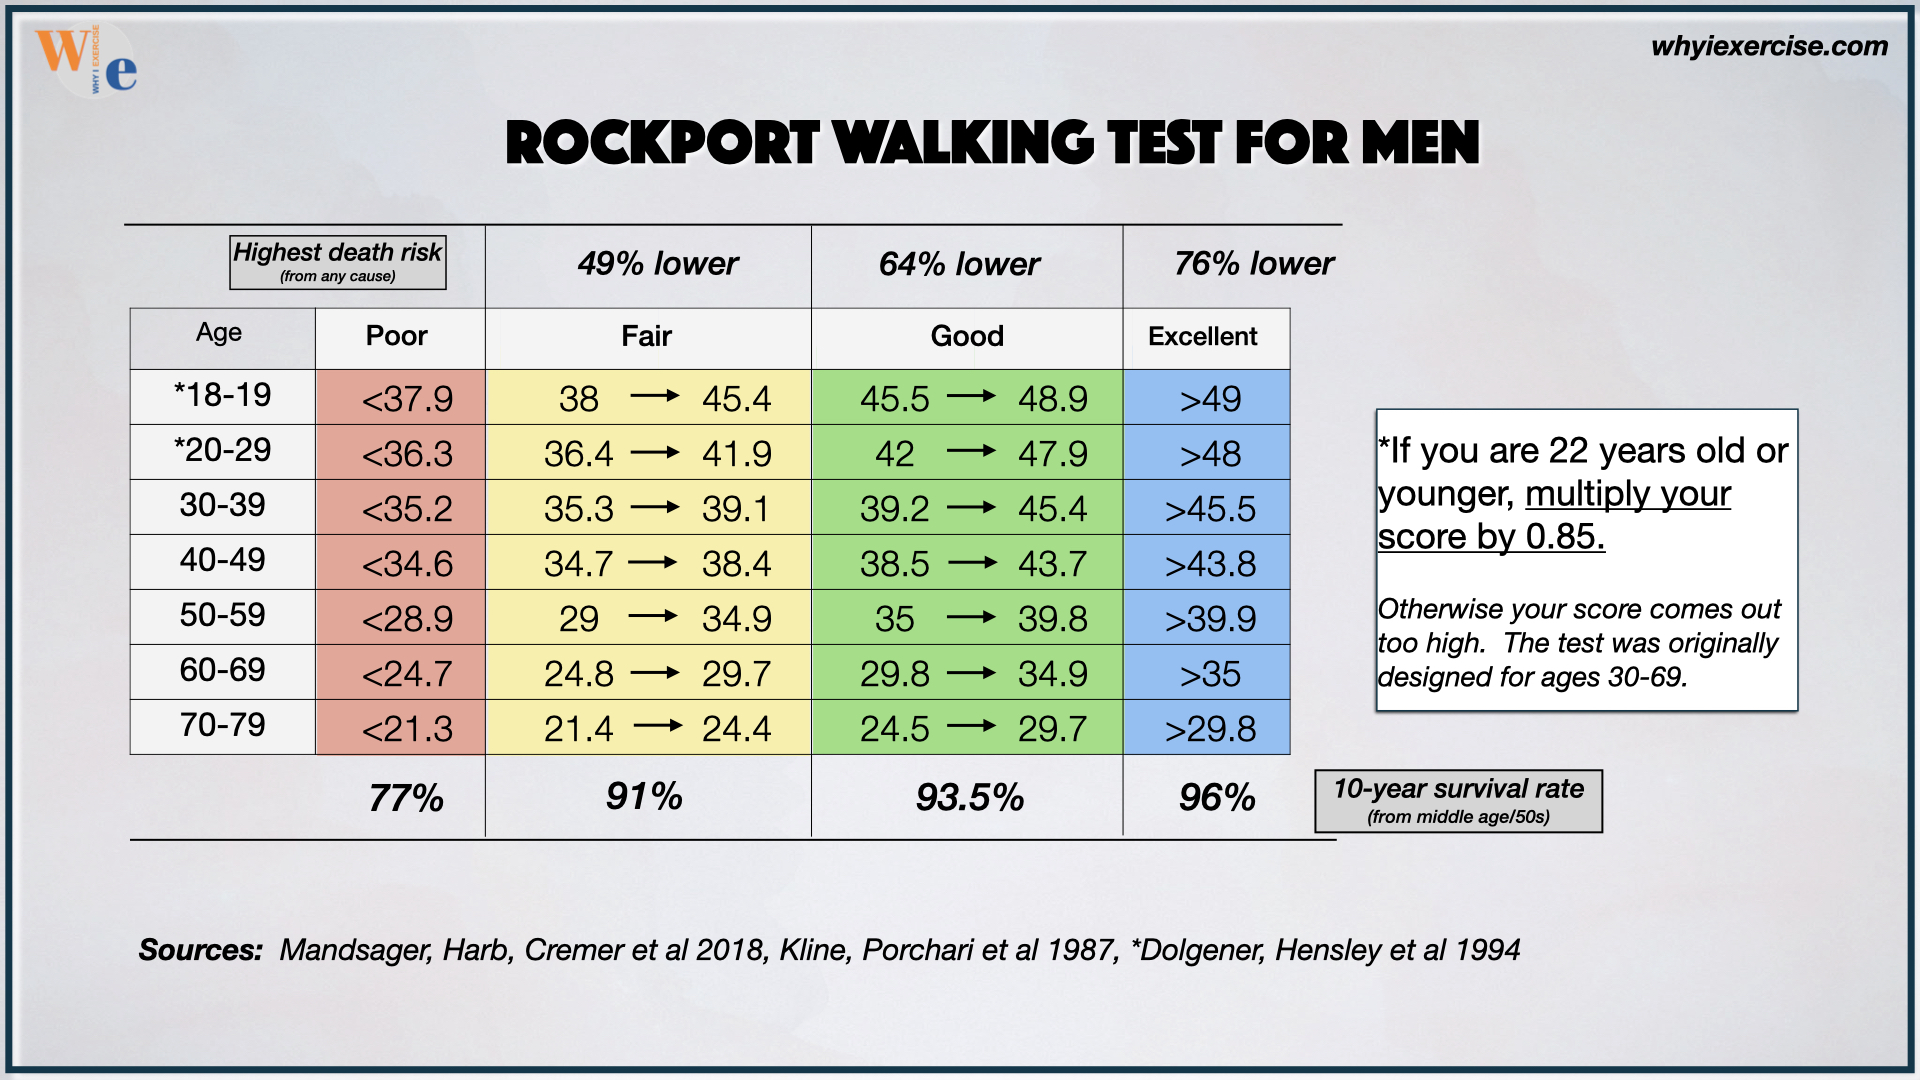 Rockport walking test age group score chart for men